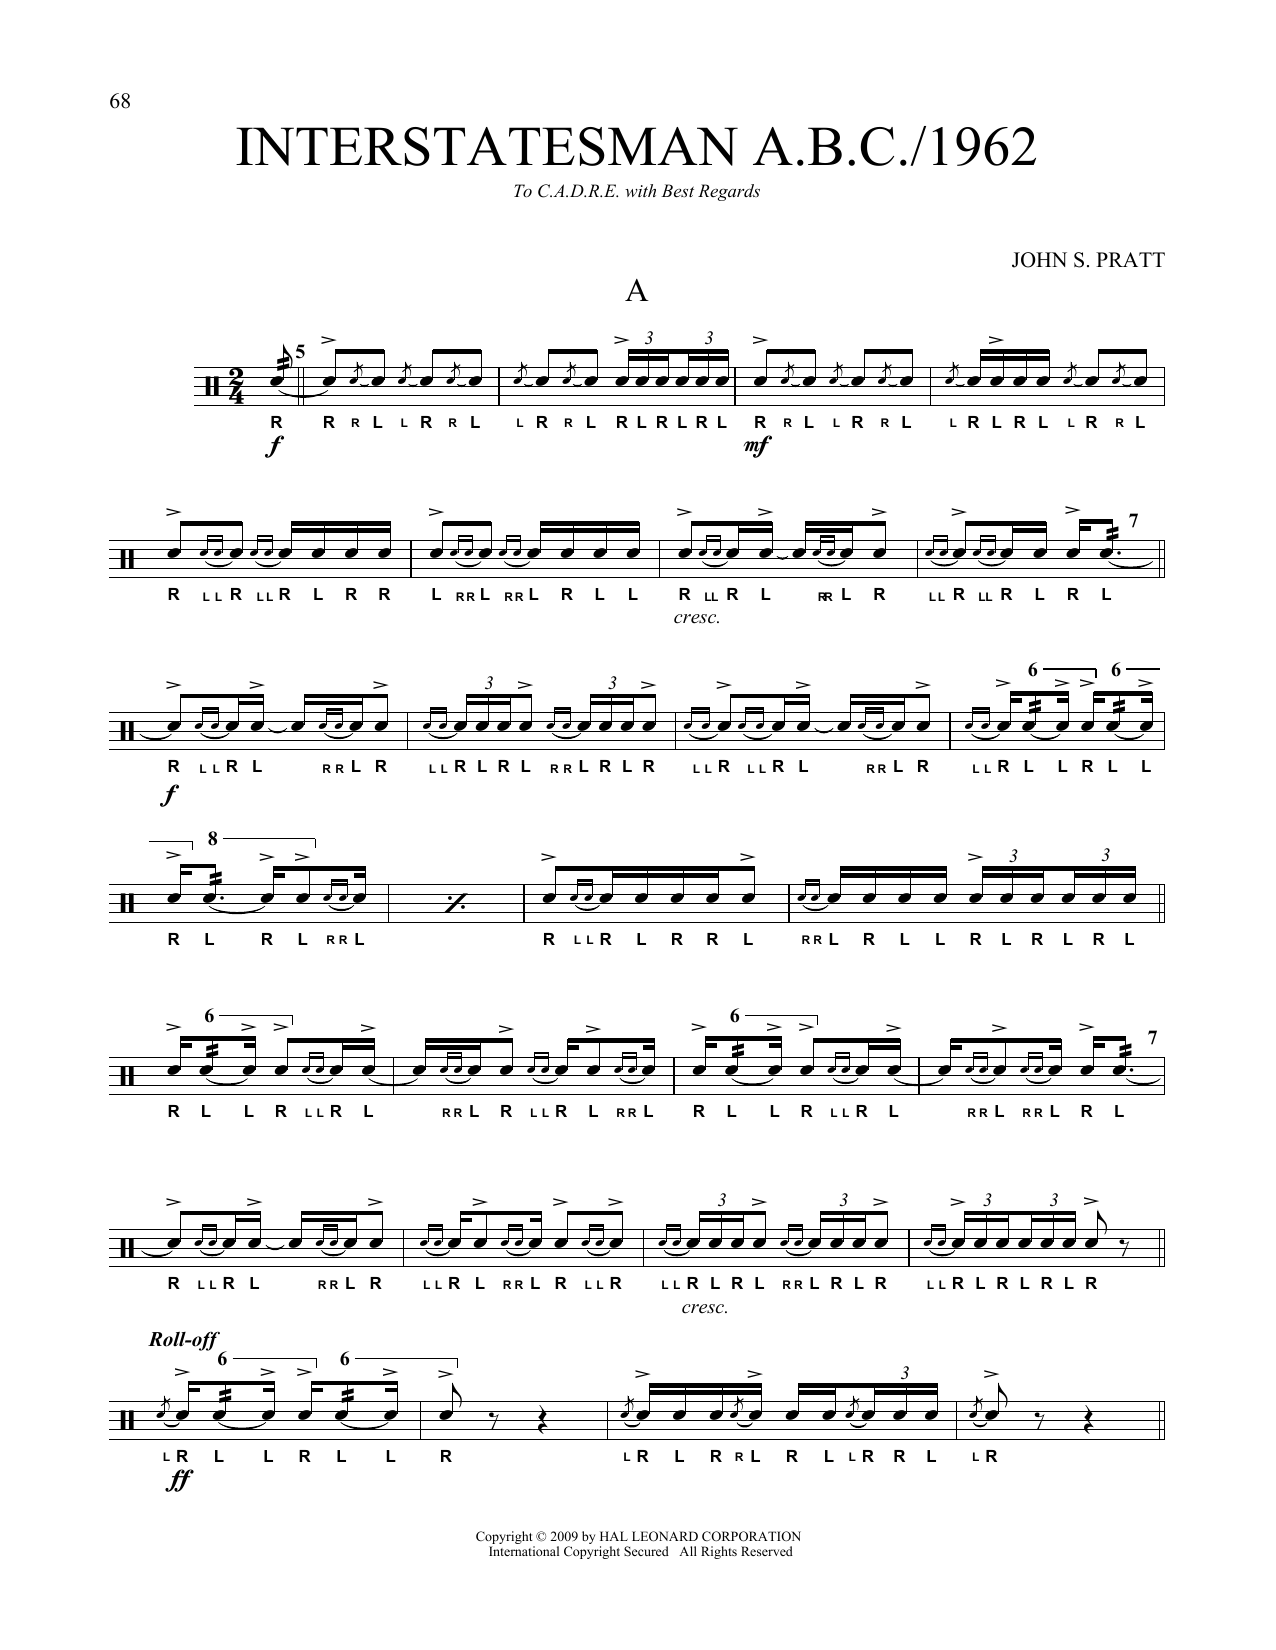 John S. Pratt Interstatesman A.B.C./1962 Sheet Music Notes & Chords for Snare Drum Solo - Download or Print PDF